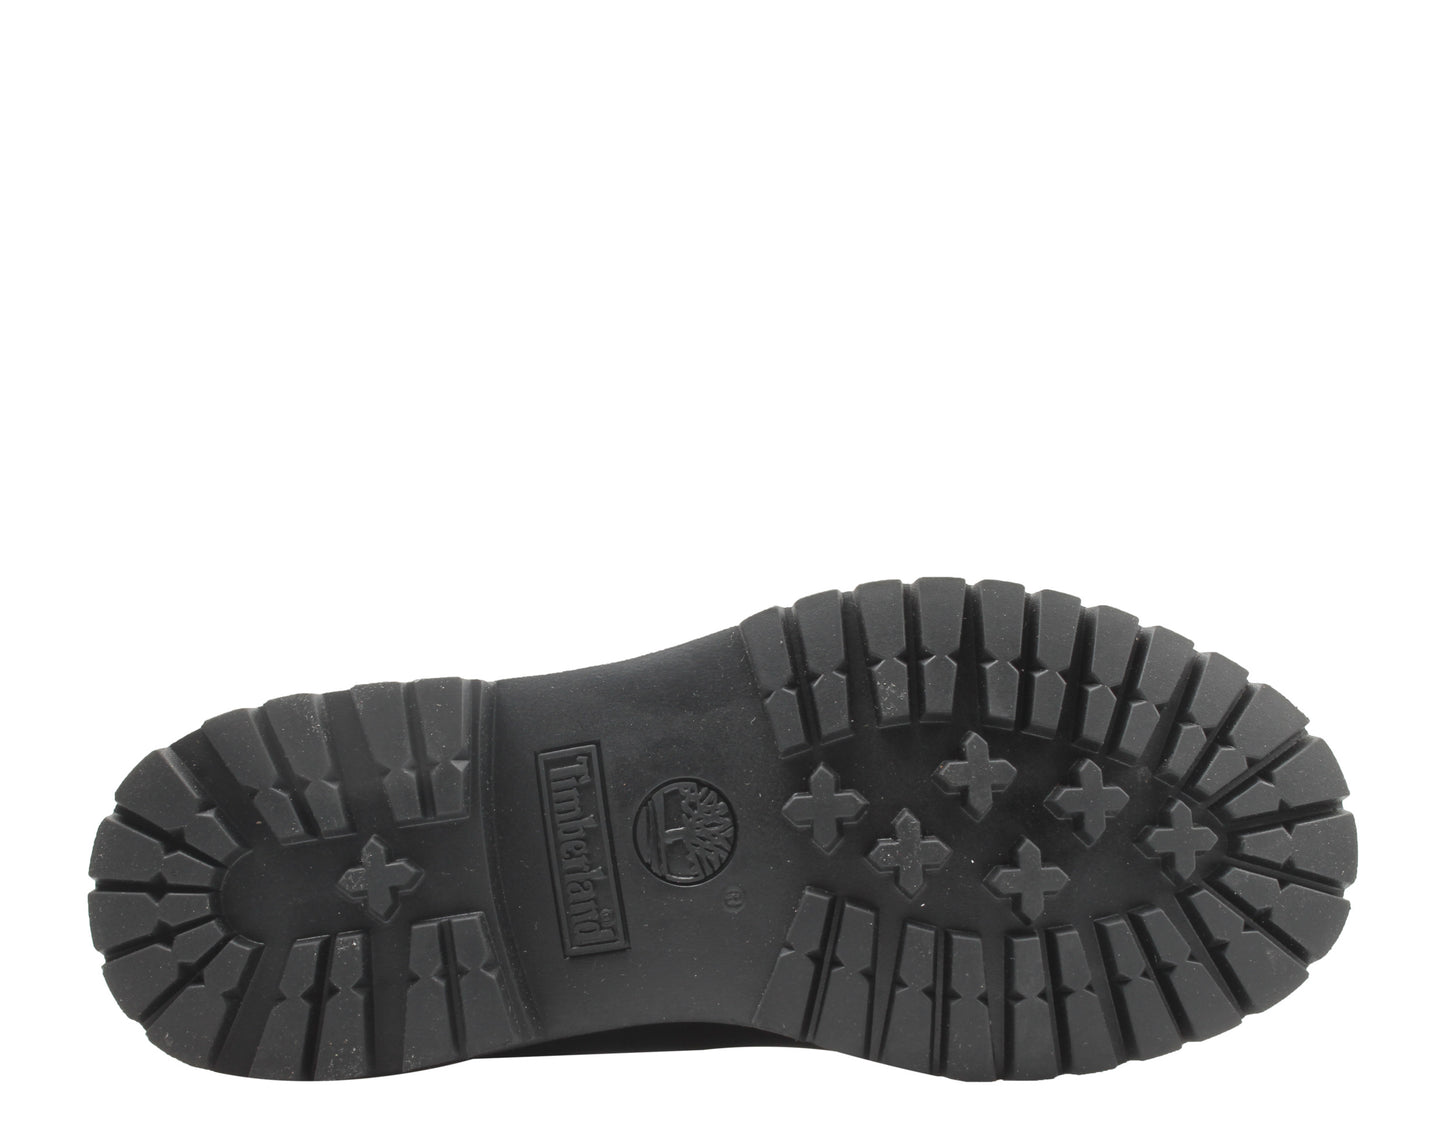 Timberland 6-Inch Premium Waterproof Black/Iridescent Women's Boots A21Y1